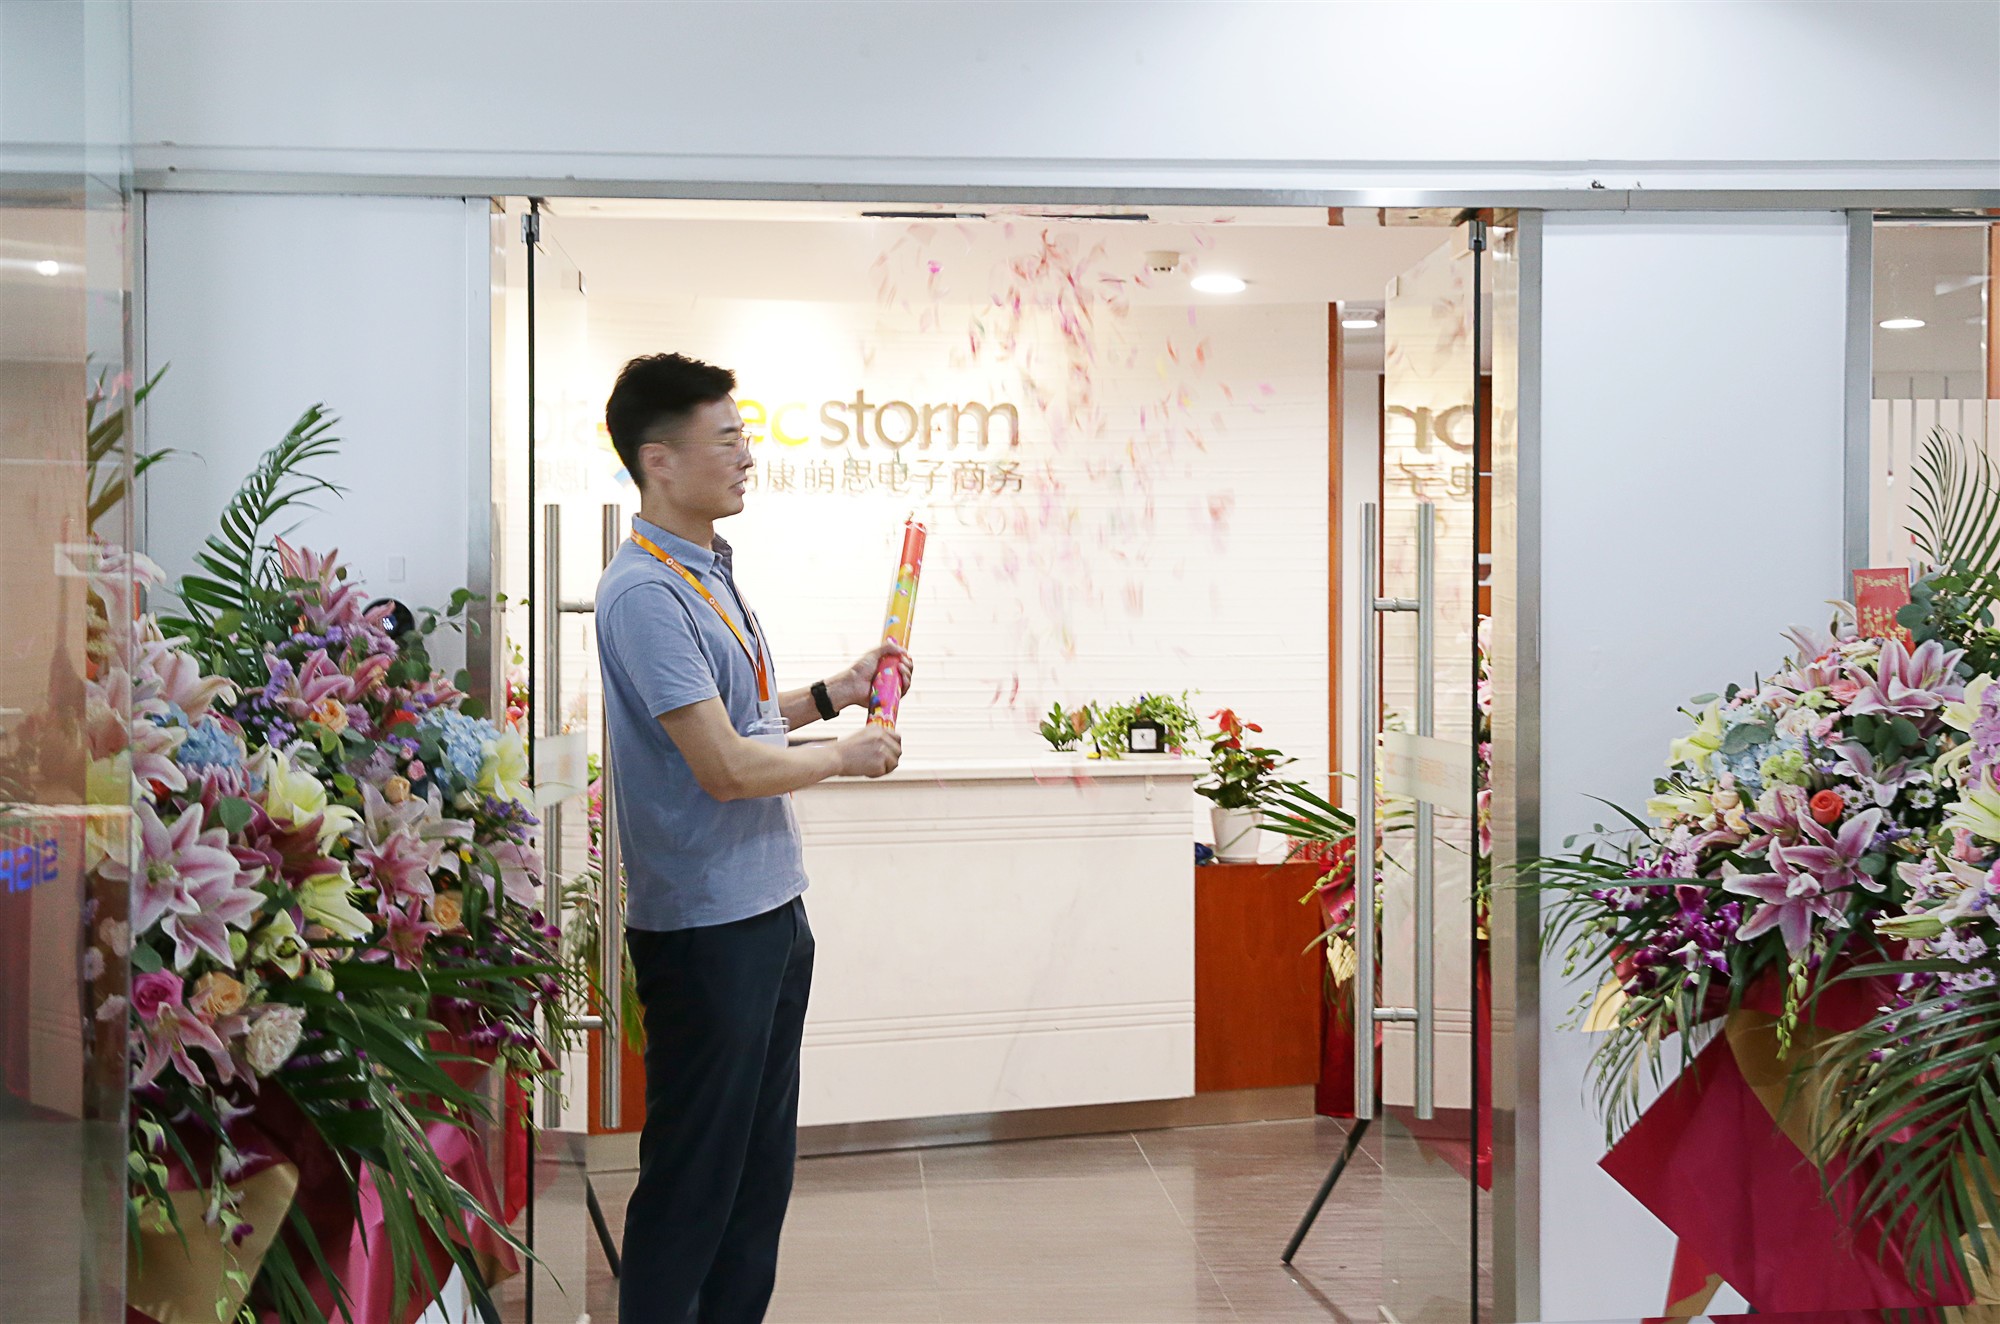 Suzhou Ecstorm headquarter office